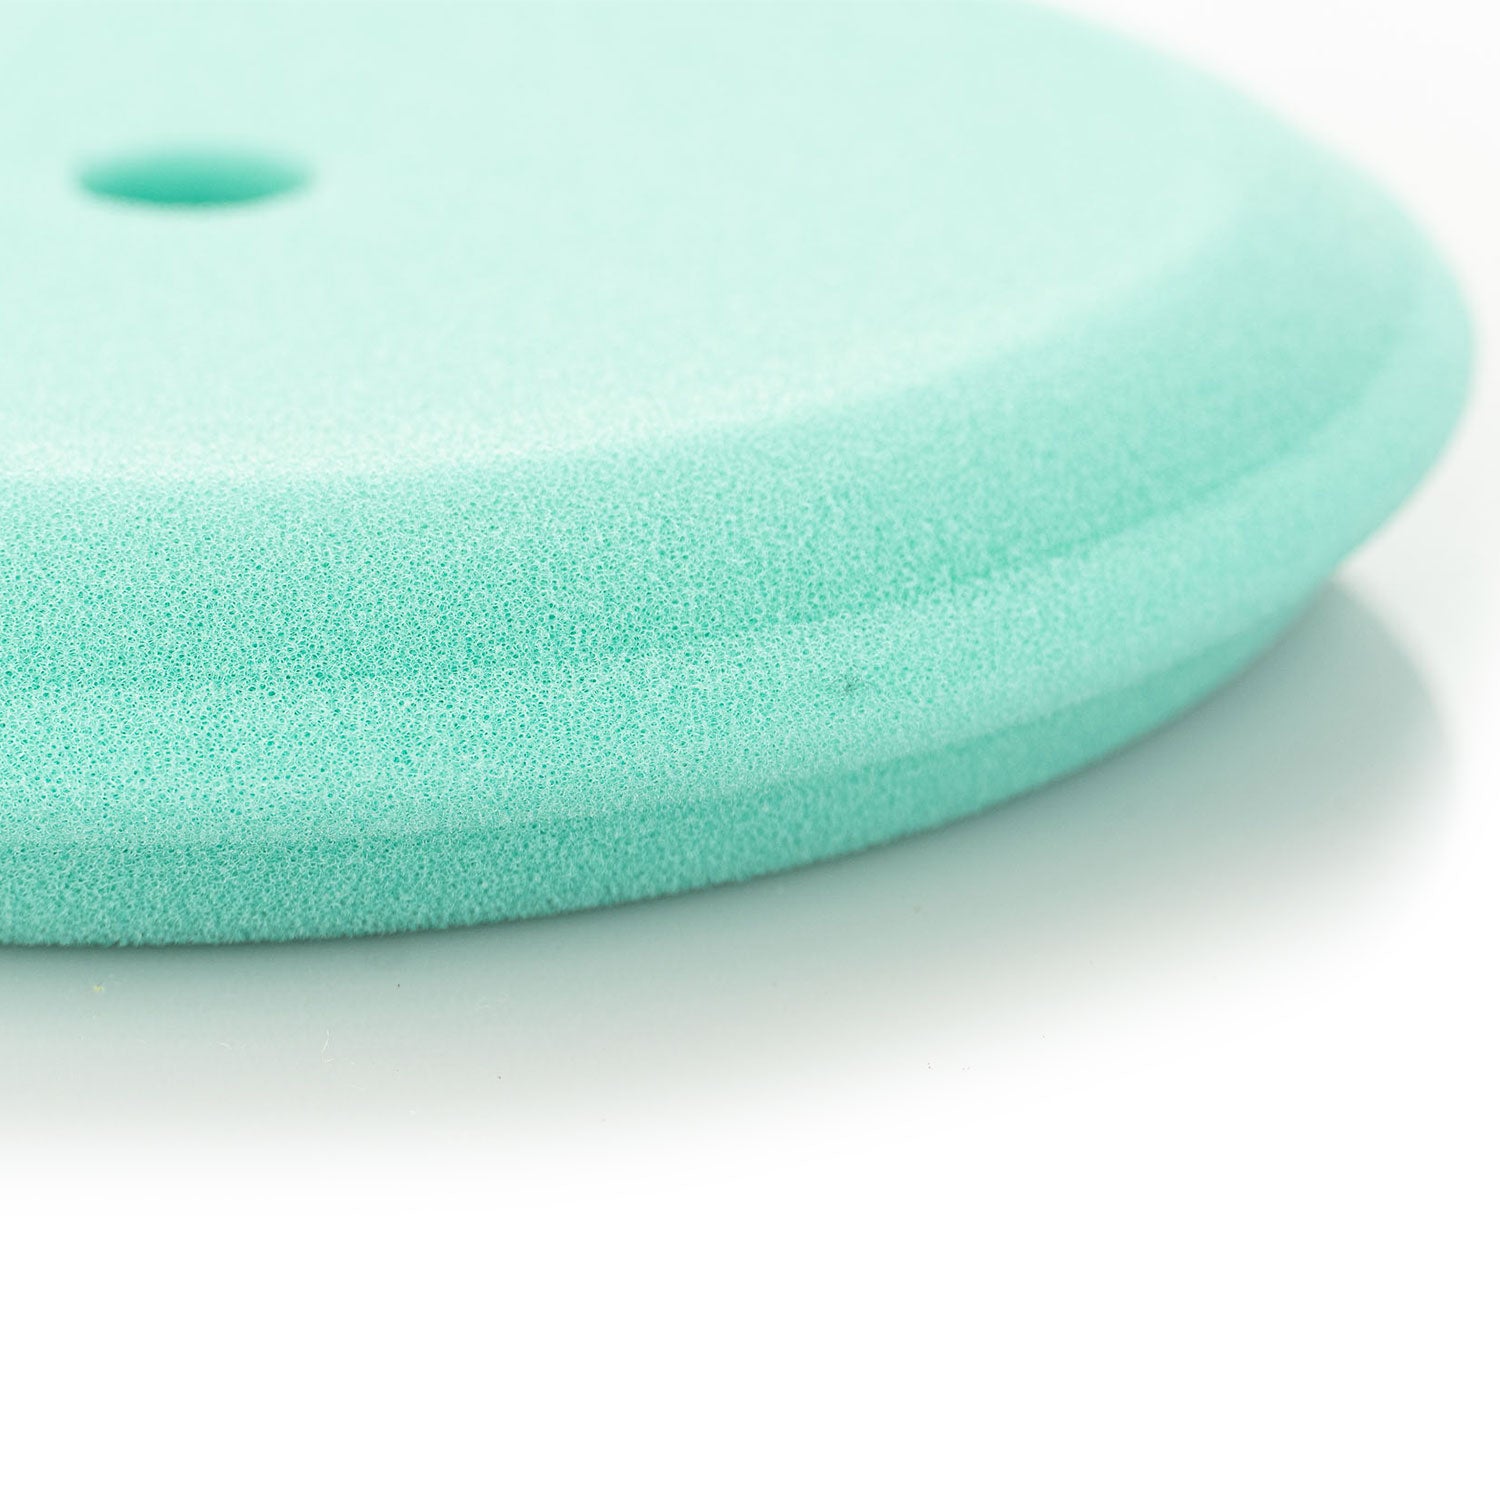 green-buffing-pads-foam-close-up